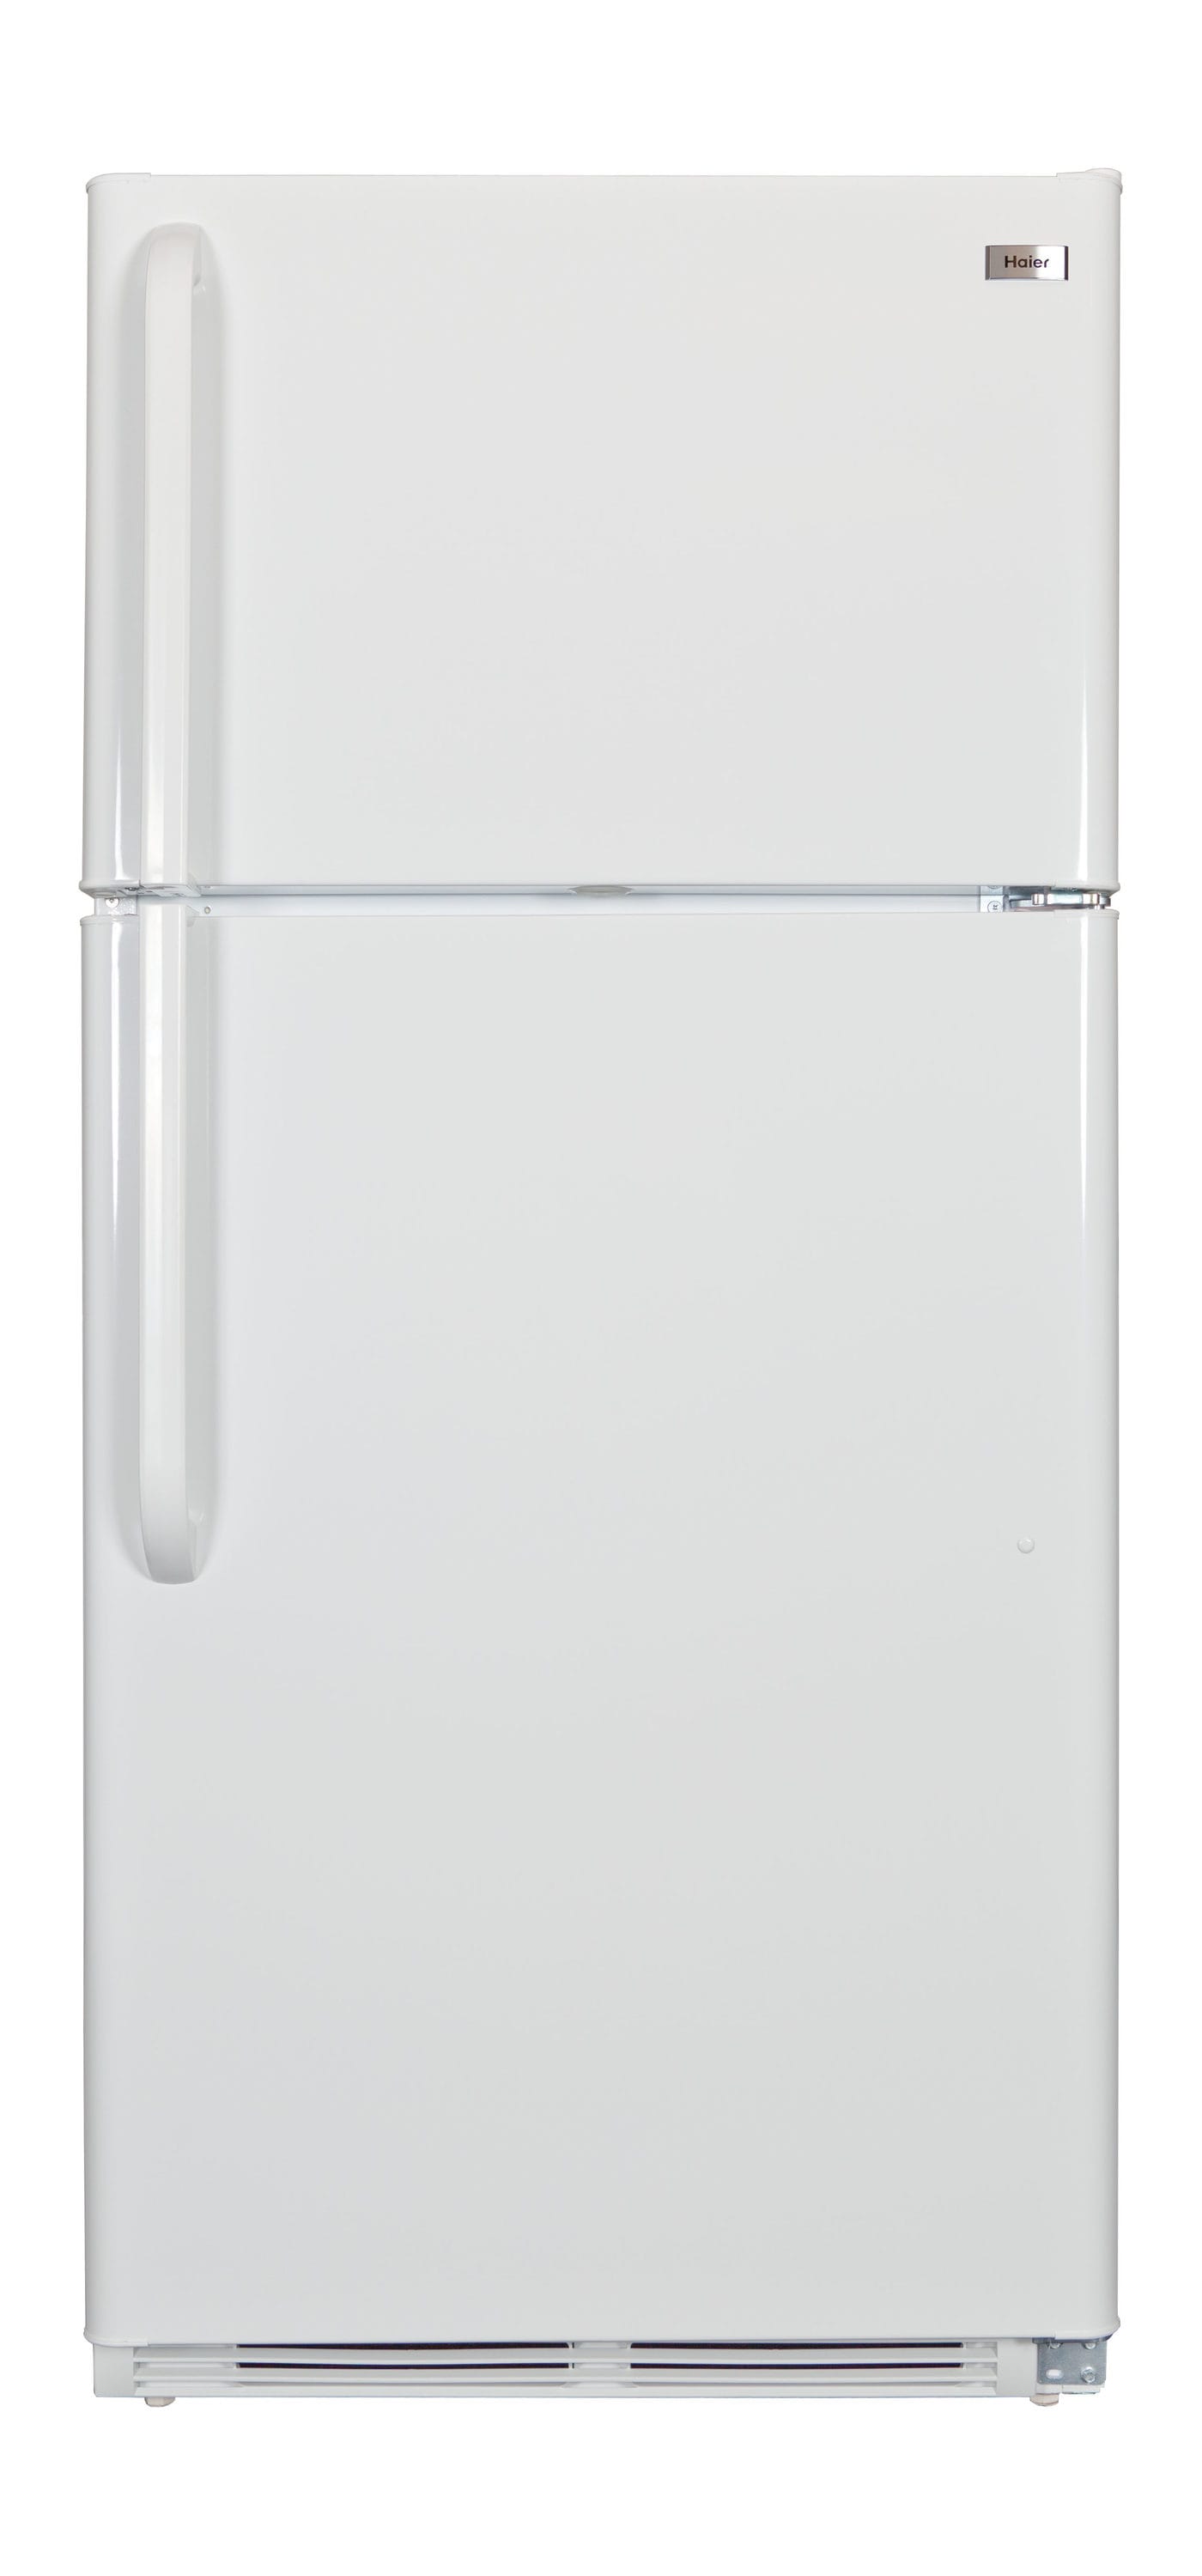 Haier HSW02C Freestanding 1.8 Cu.Ft. Compact Refrigerator, White